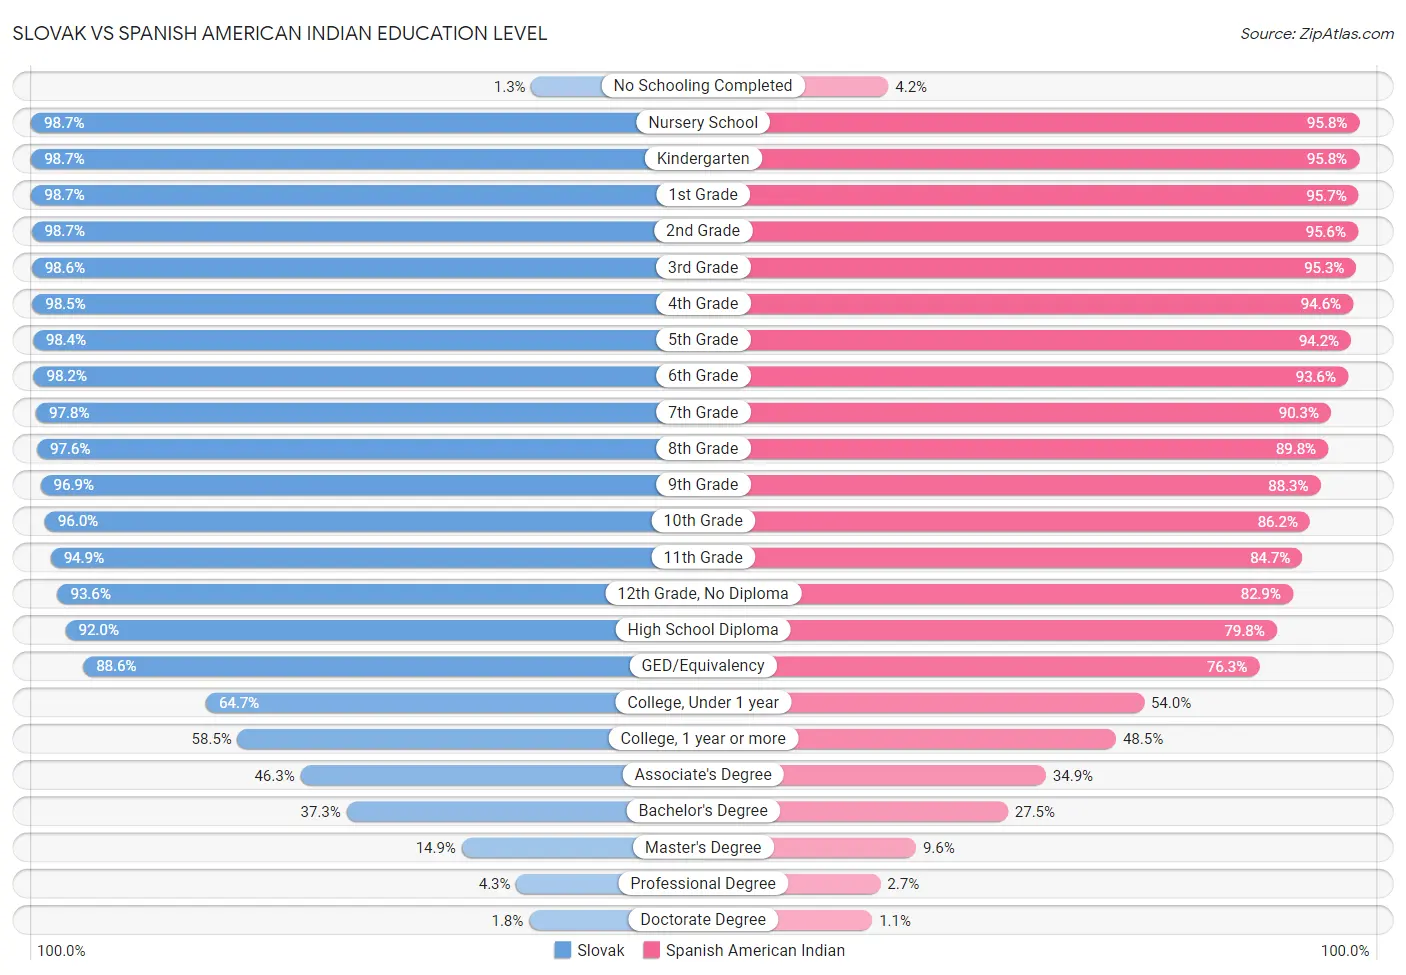 Slovak vs Spanish American Indian Education Level